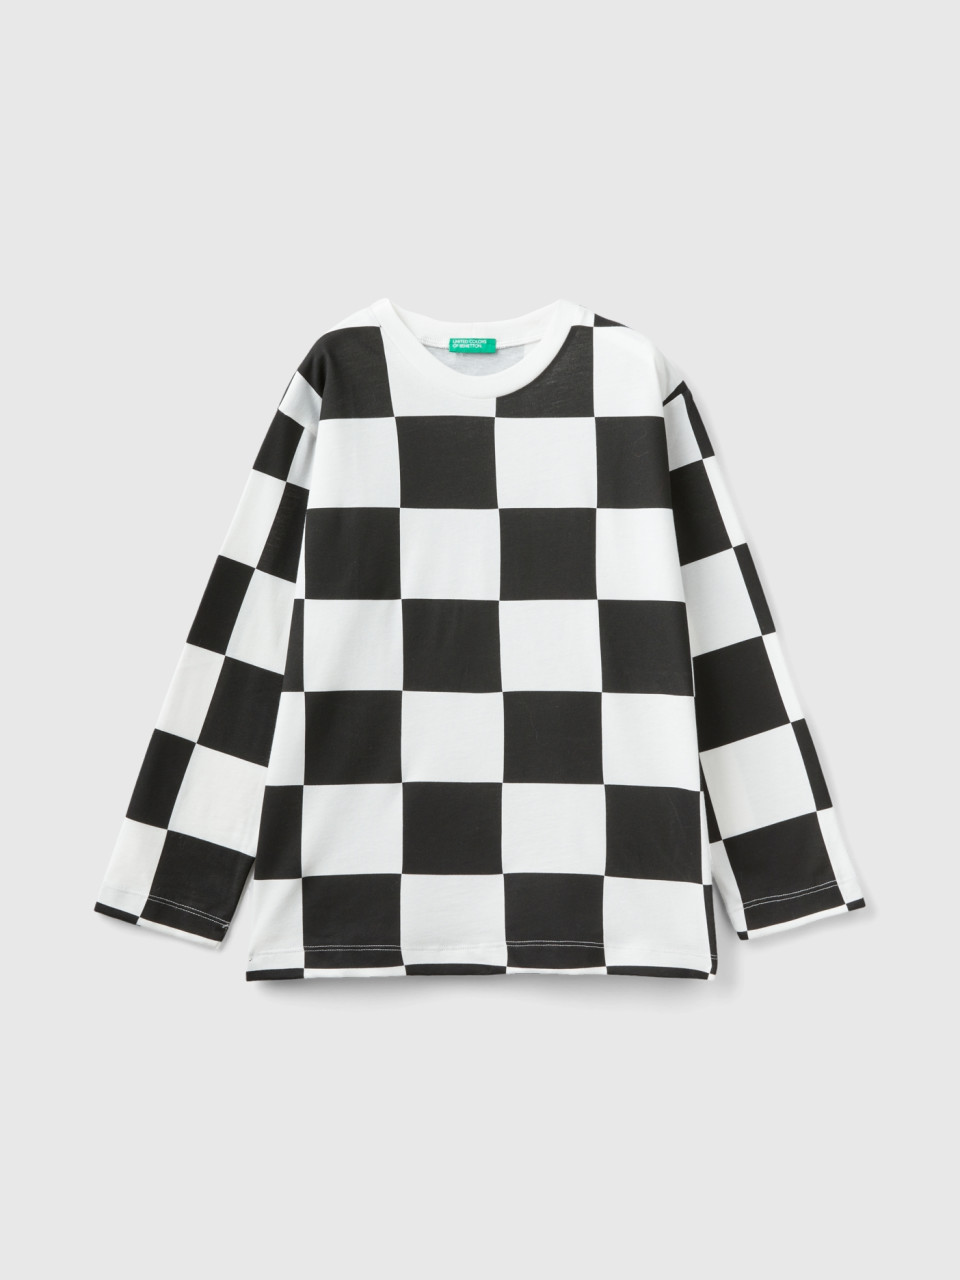 Benetton, Warm Checkered T-shirt, White, Kids